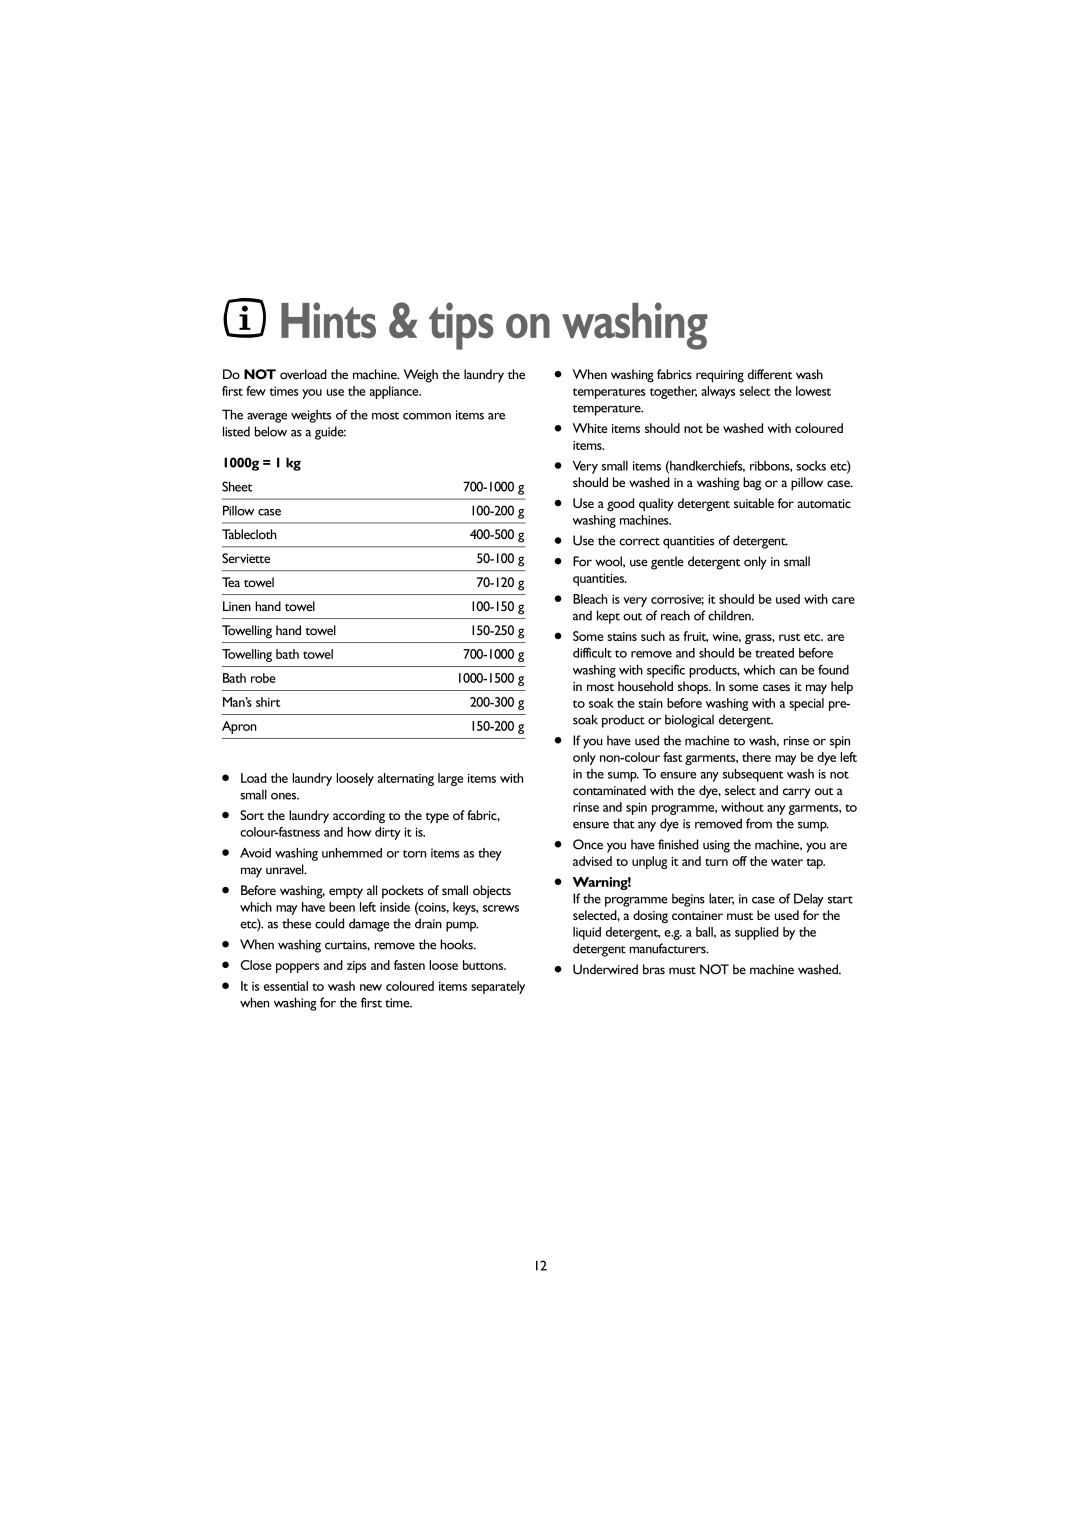 John Lewis JLWM 1406 instruction manual Hints & tips on washing, 1000g = 1 kg 